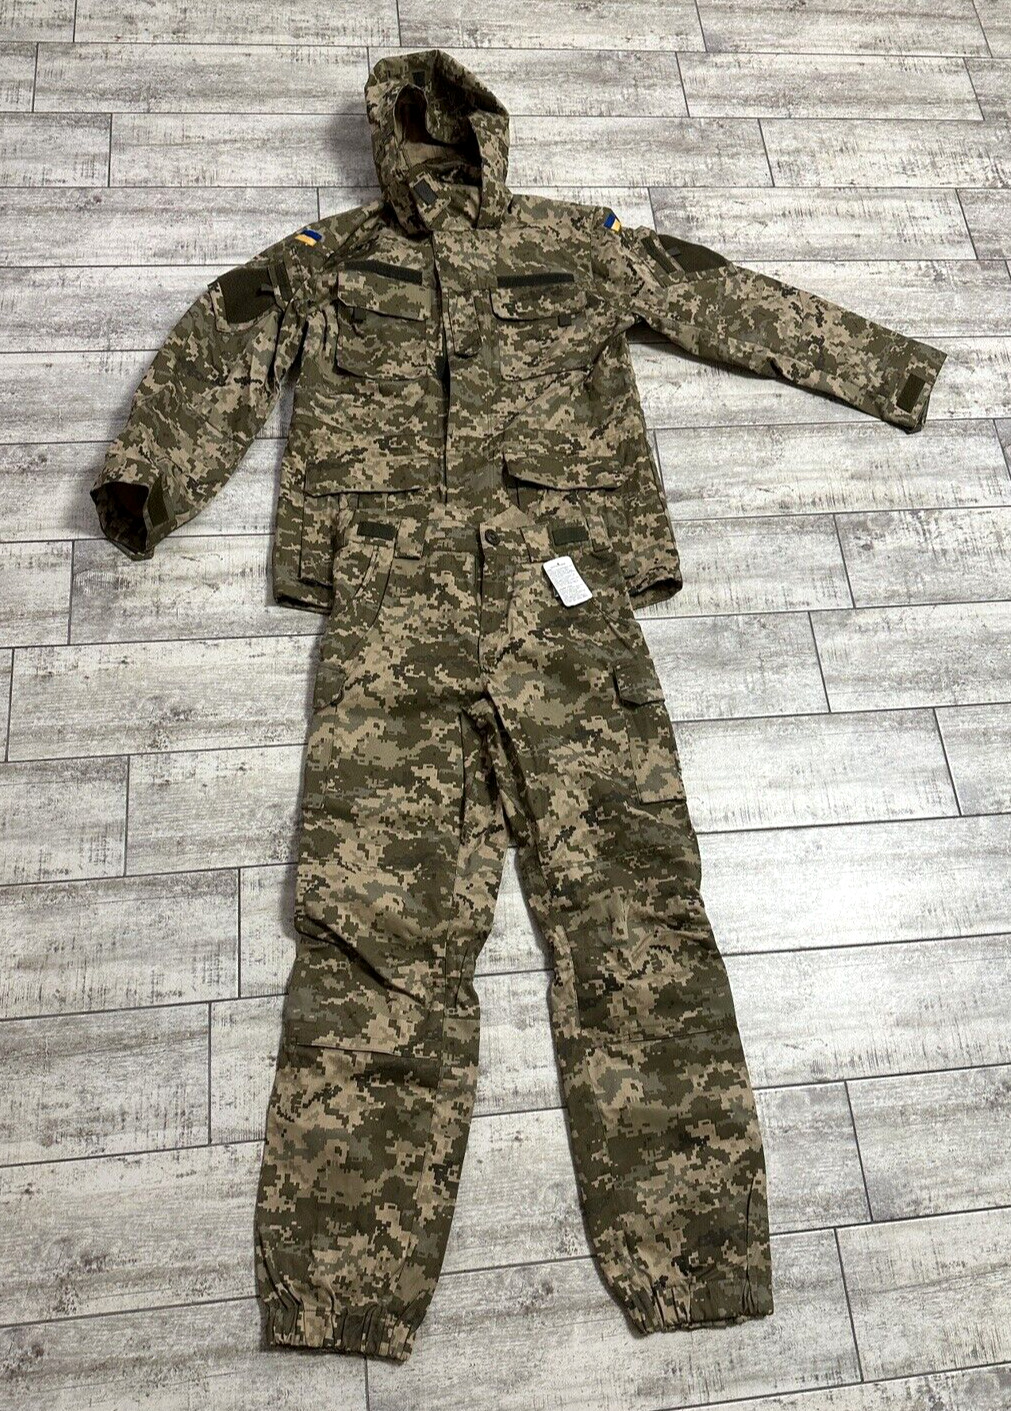 Ukraine military uniform ZSU soldier army PIXEL Tactical Uniform Camouflage NEW